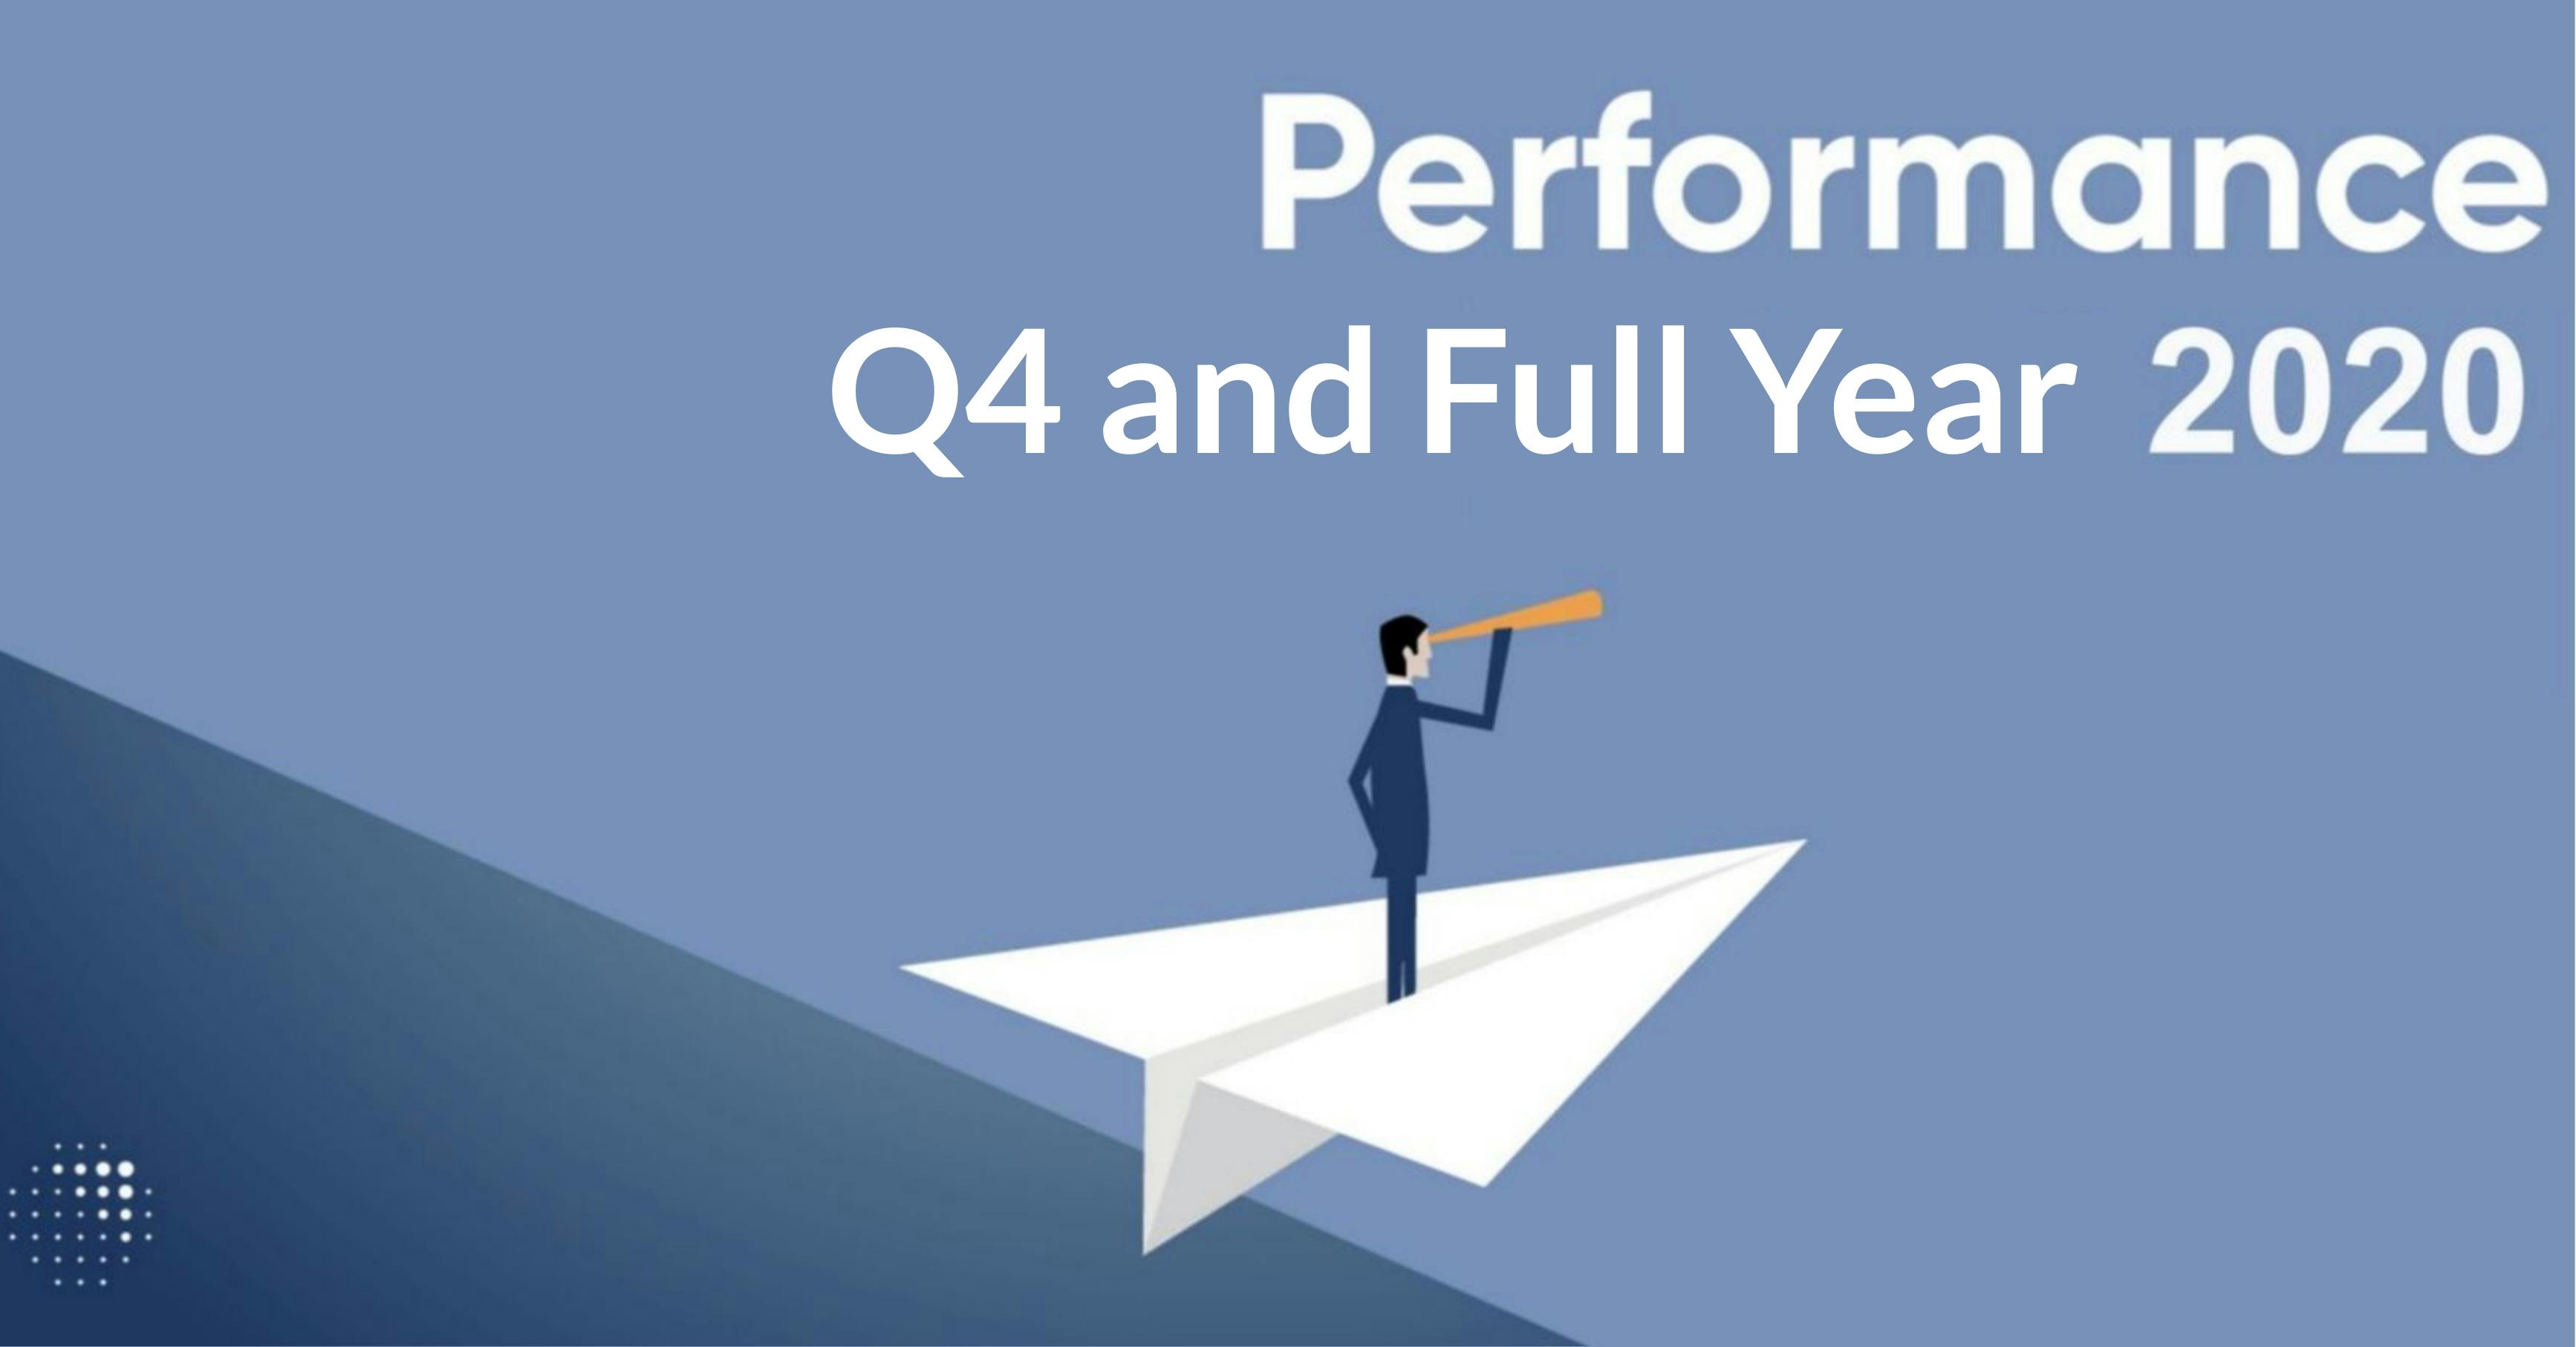 Seeking Singularity Performance - Q4 and Full Year 2020